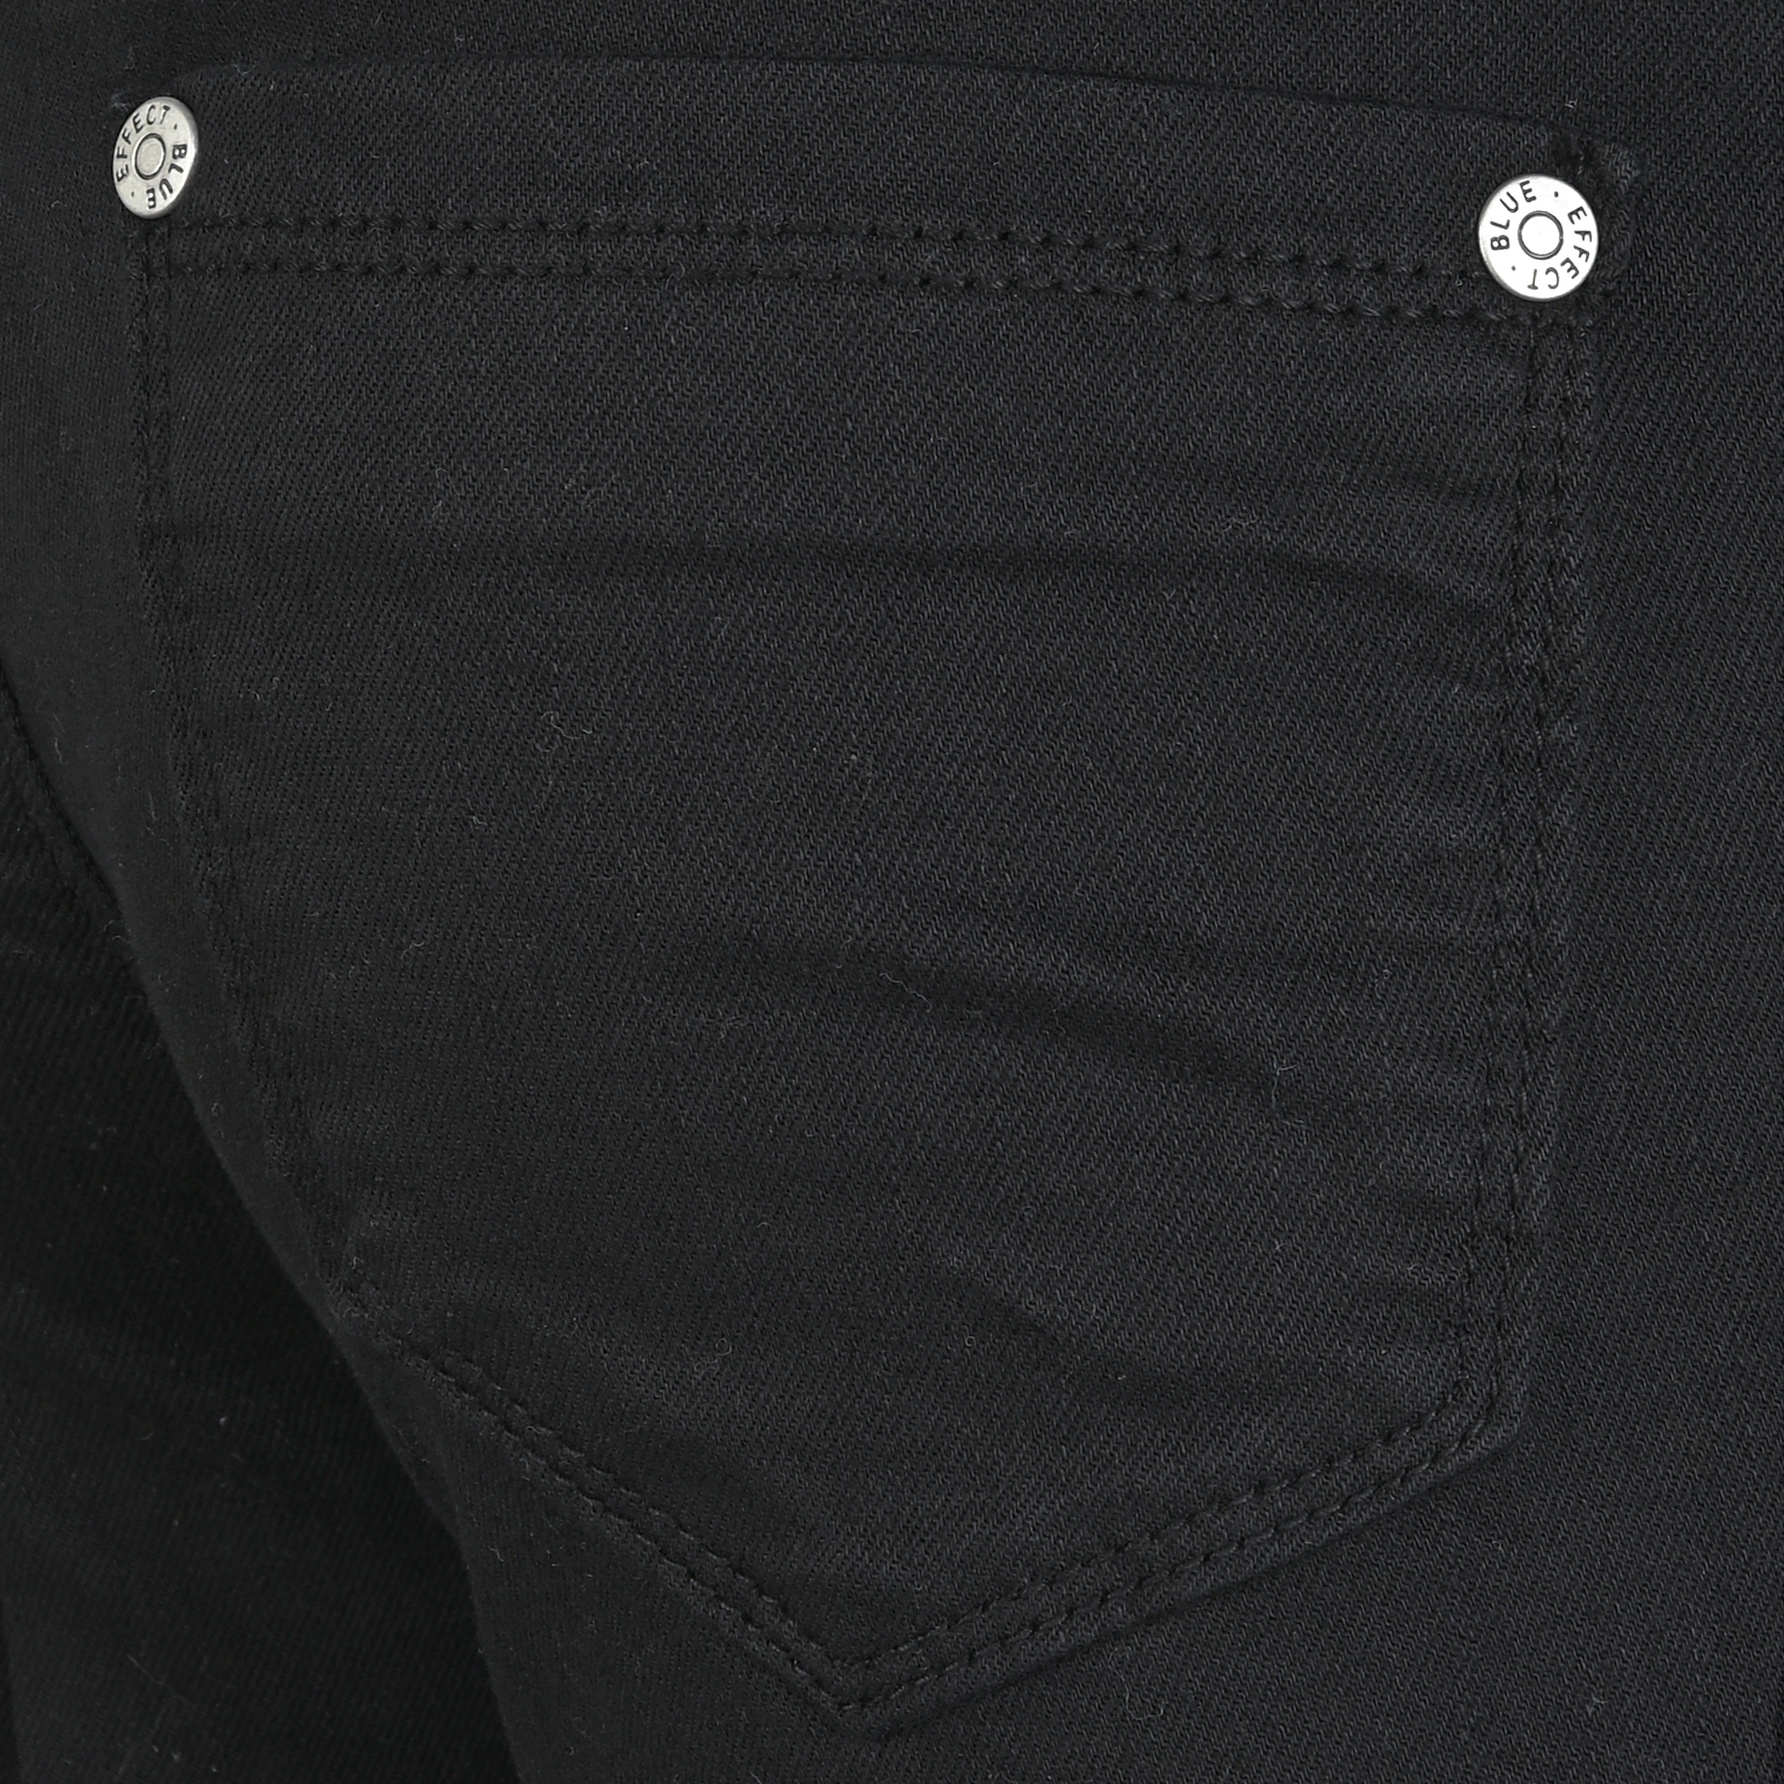 1197-Girls High-Waist Pant Cropped, Skinny, verfügbar in Slim,Normal